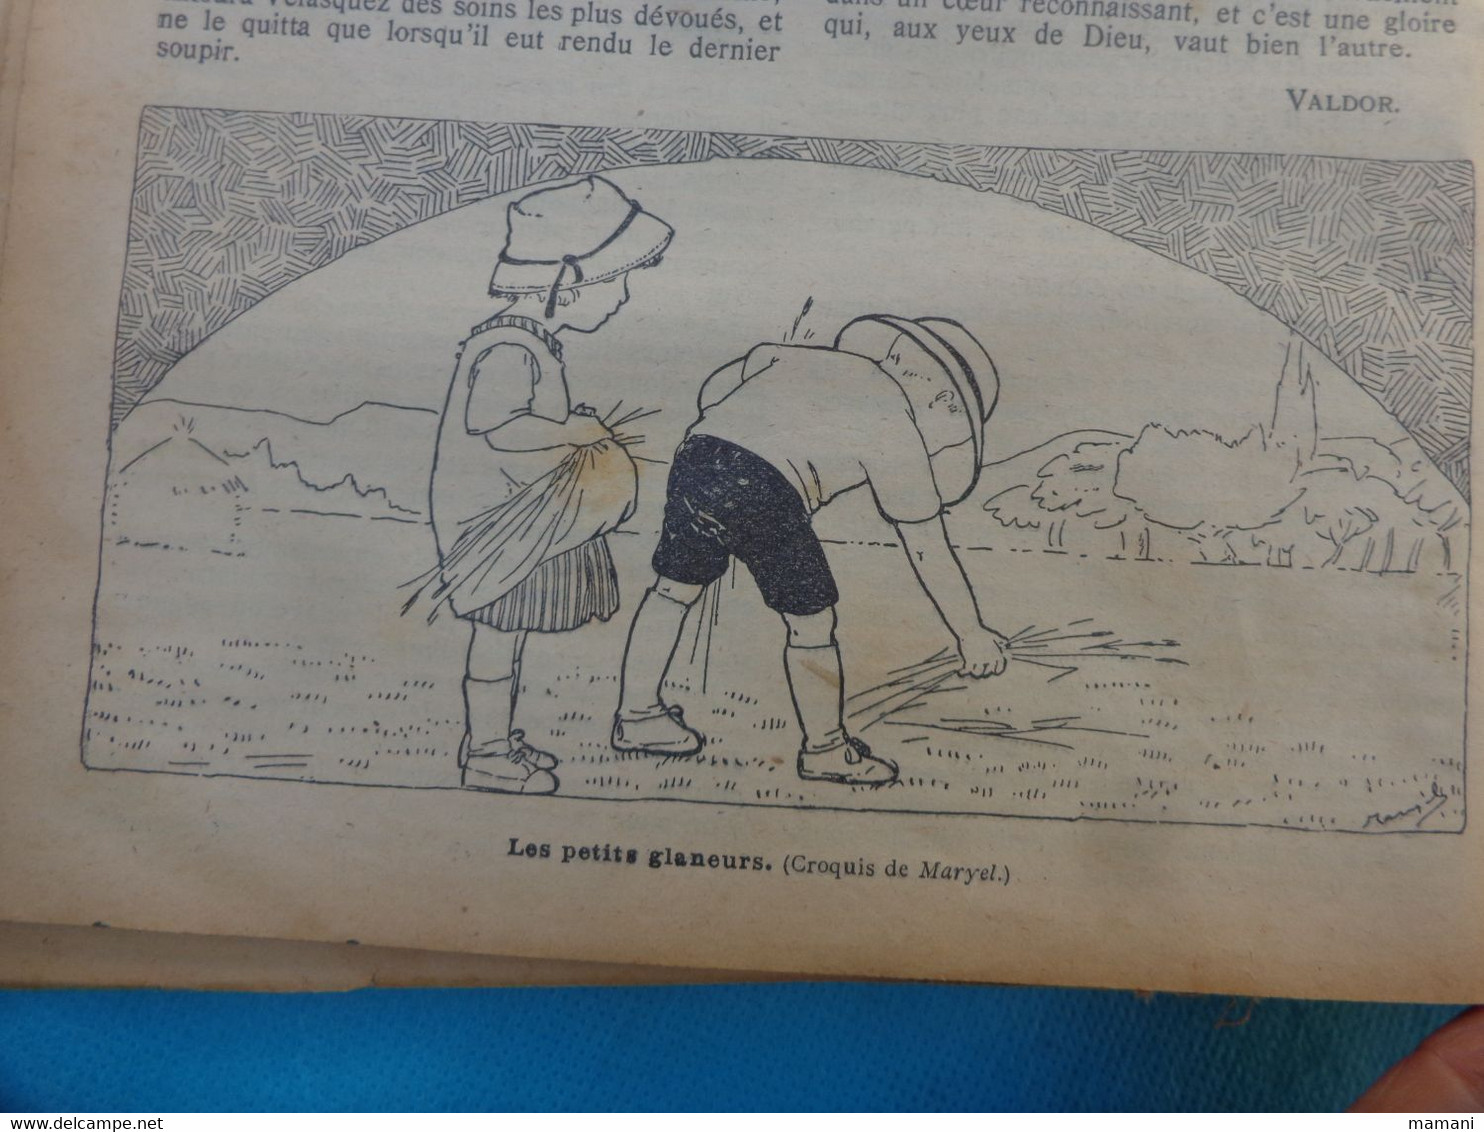 l'etoile noeliste n° 374 7/7/1921 a 399 du 29/12/1921 illustrateur mayrel